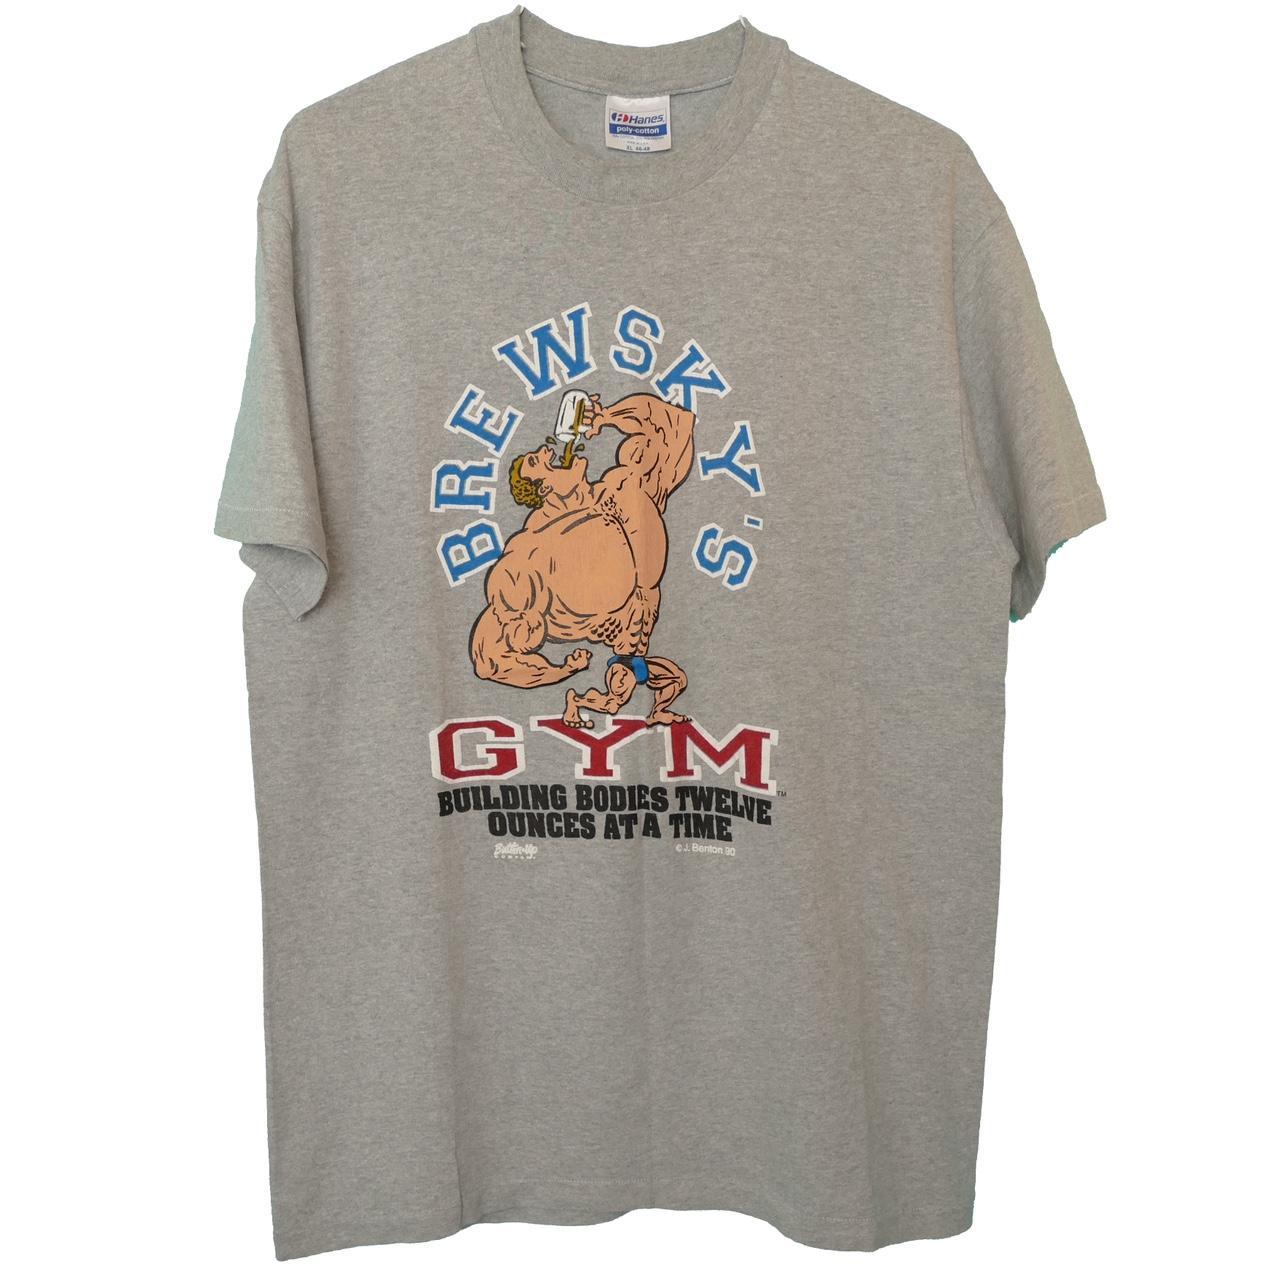 Gym Rat Men's T-Shirt